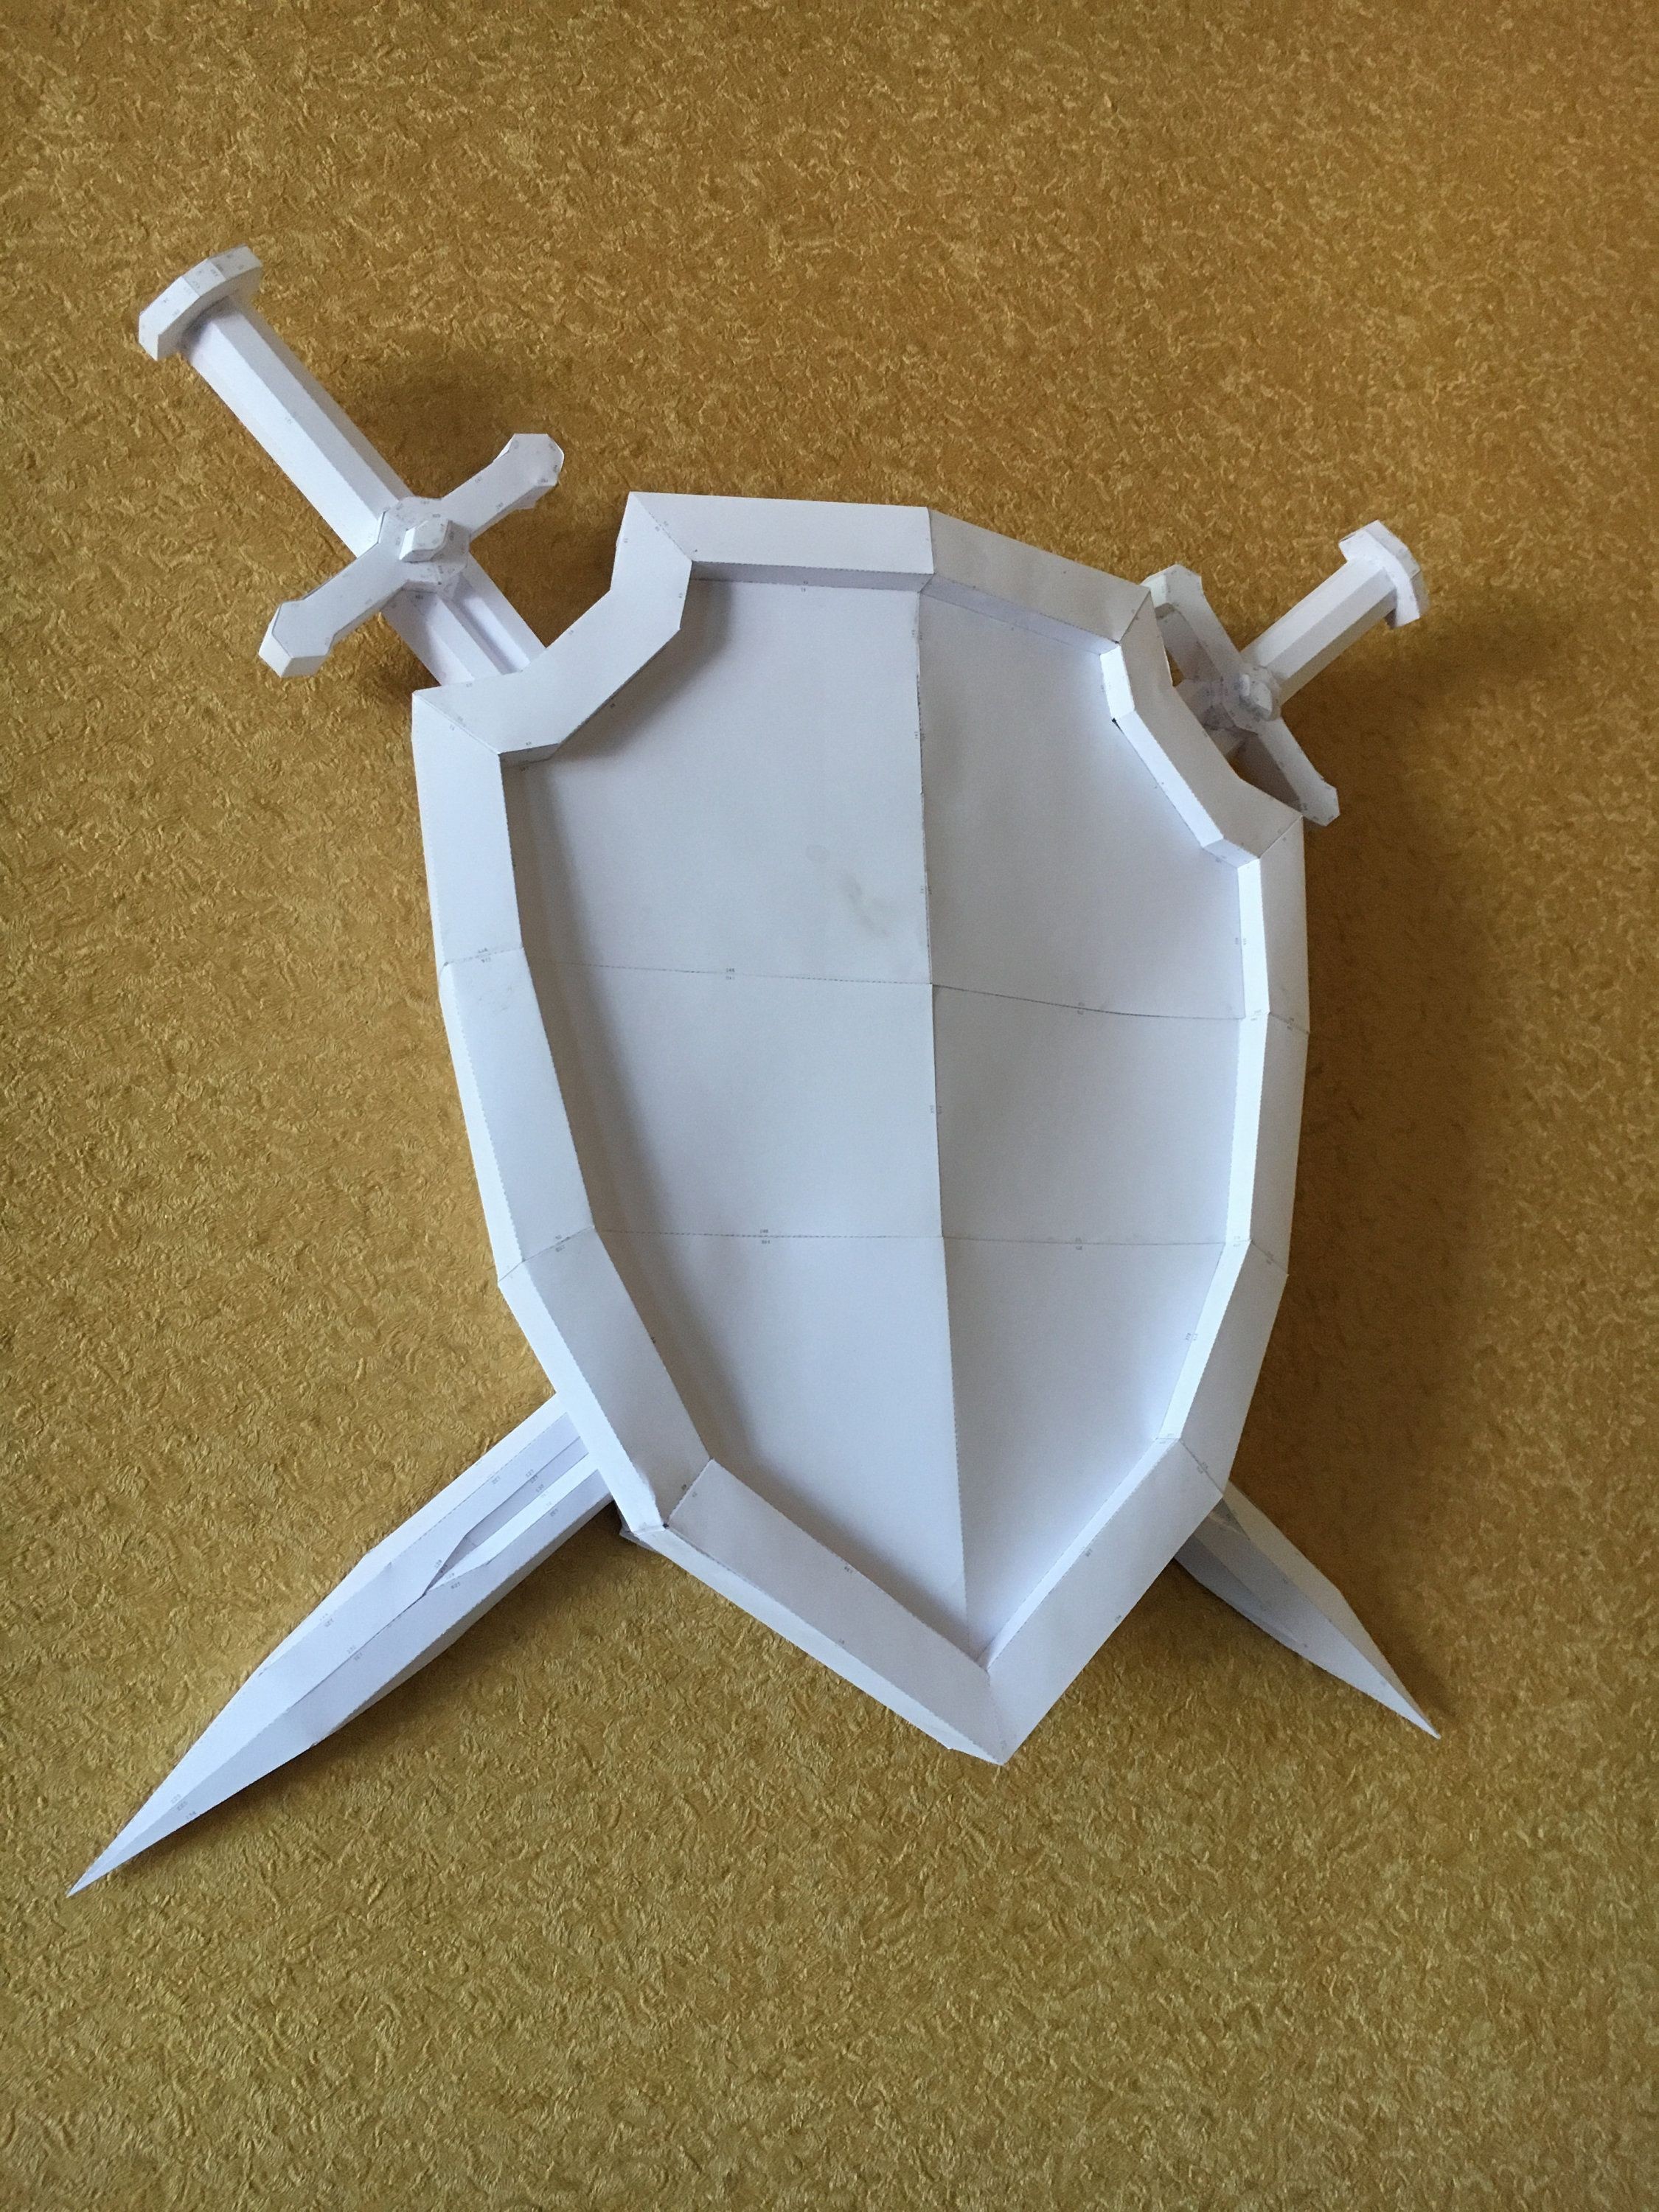 Papercraft Batman Mask Sword Shield Diy Papercraft Model ÐÑÐ¼Ð°Ð¶Ð½ÑÐµ Ð¸Ð·Ð´ÐµÐ Ð¸Ñ